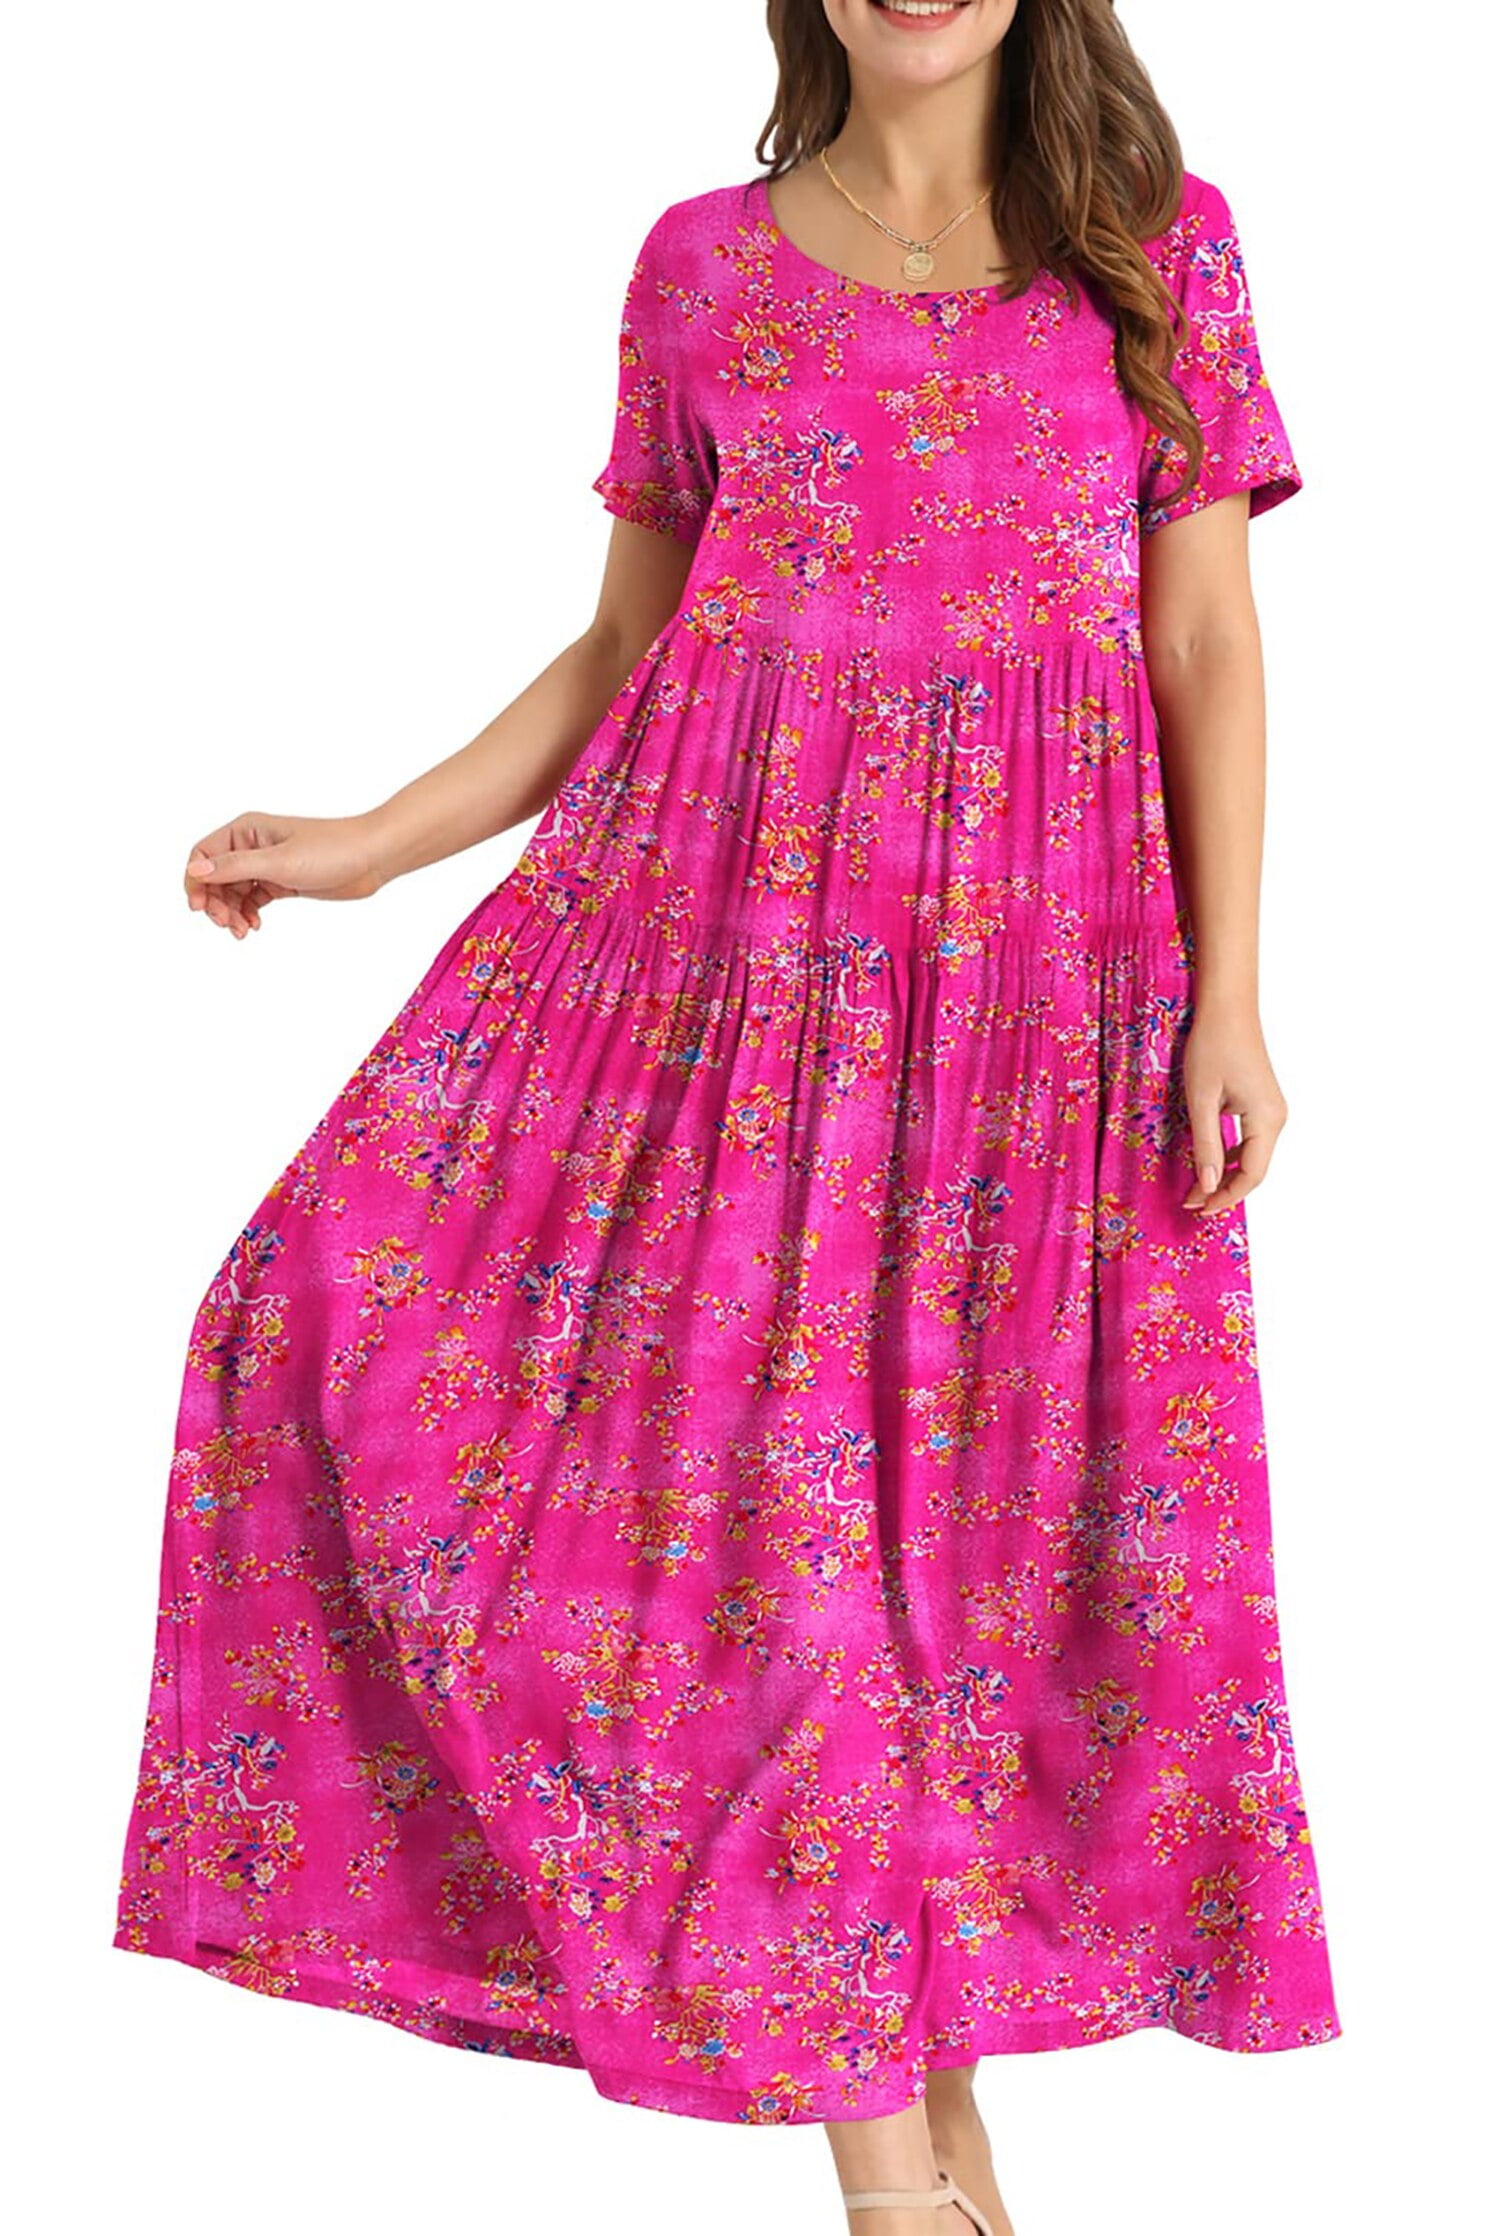 Fantaslook Summer Dresses for Women Casual Loose Maxi Bohemian Floral ...